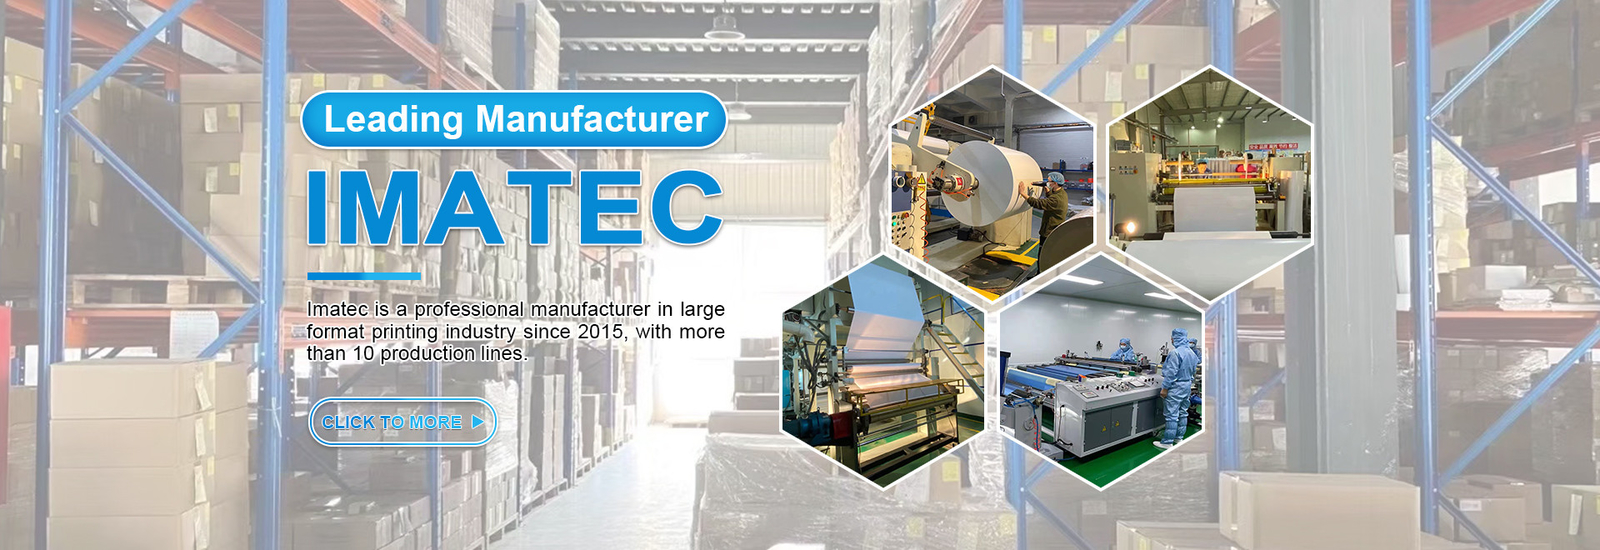 Imatec Imaging Co., Ltd. chaîne de production de fabricant